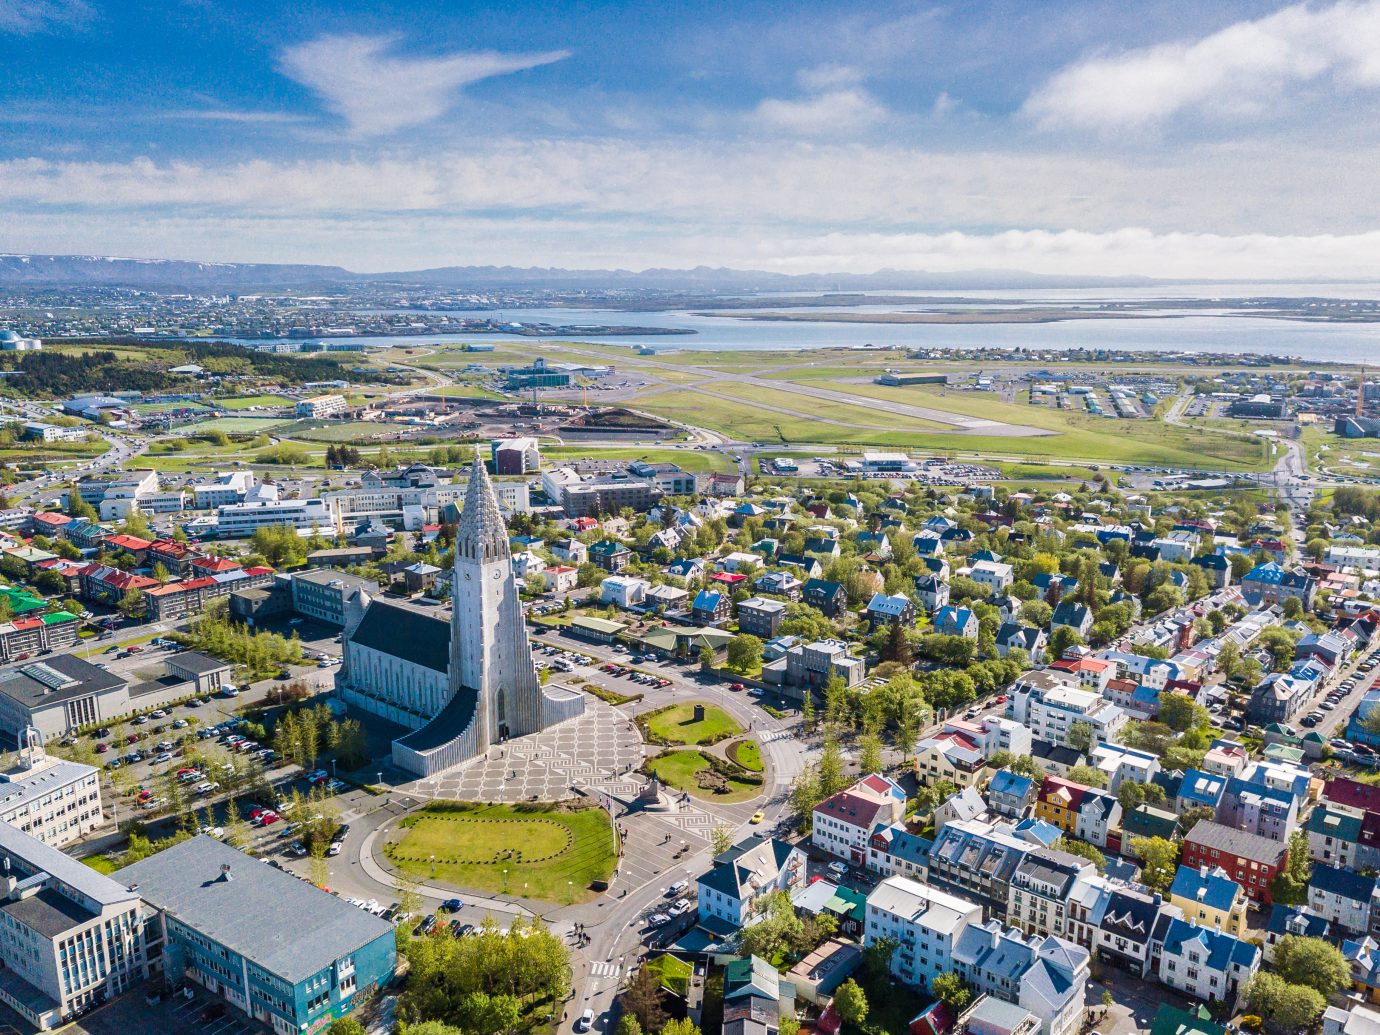 Reykjavik Iceland city scape frop the top with Hallgrimskirkja church.